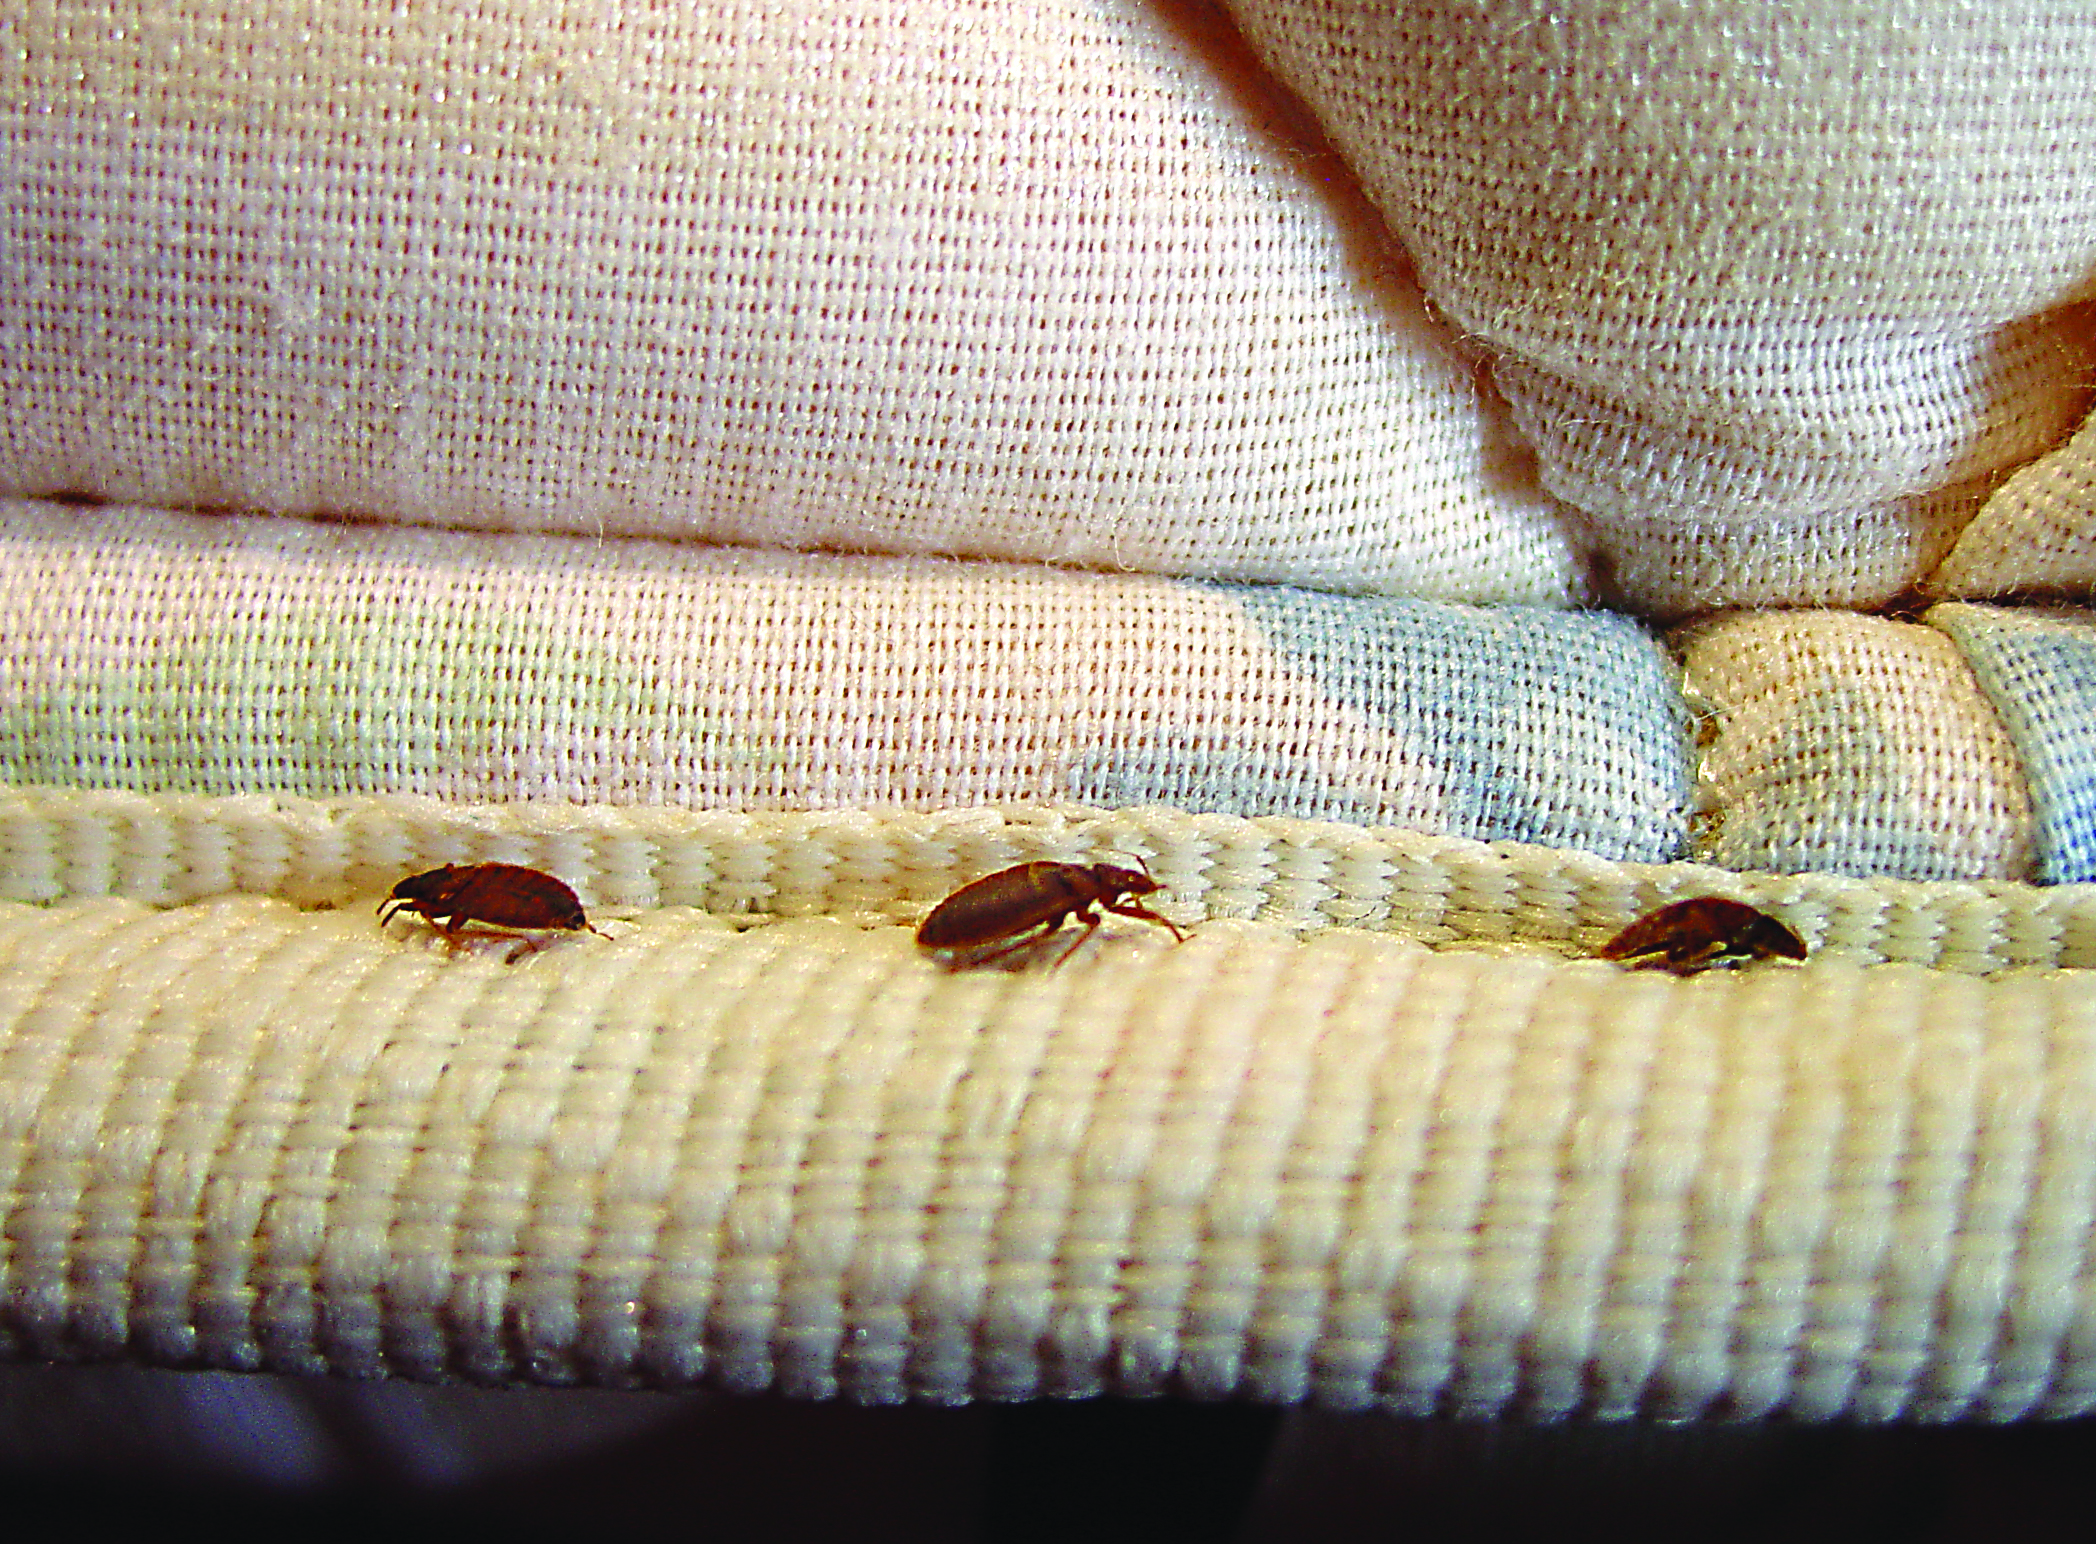 bed bug on mattresses images